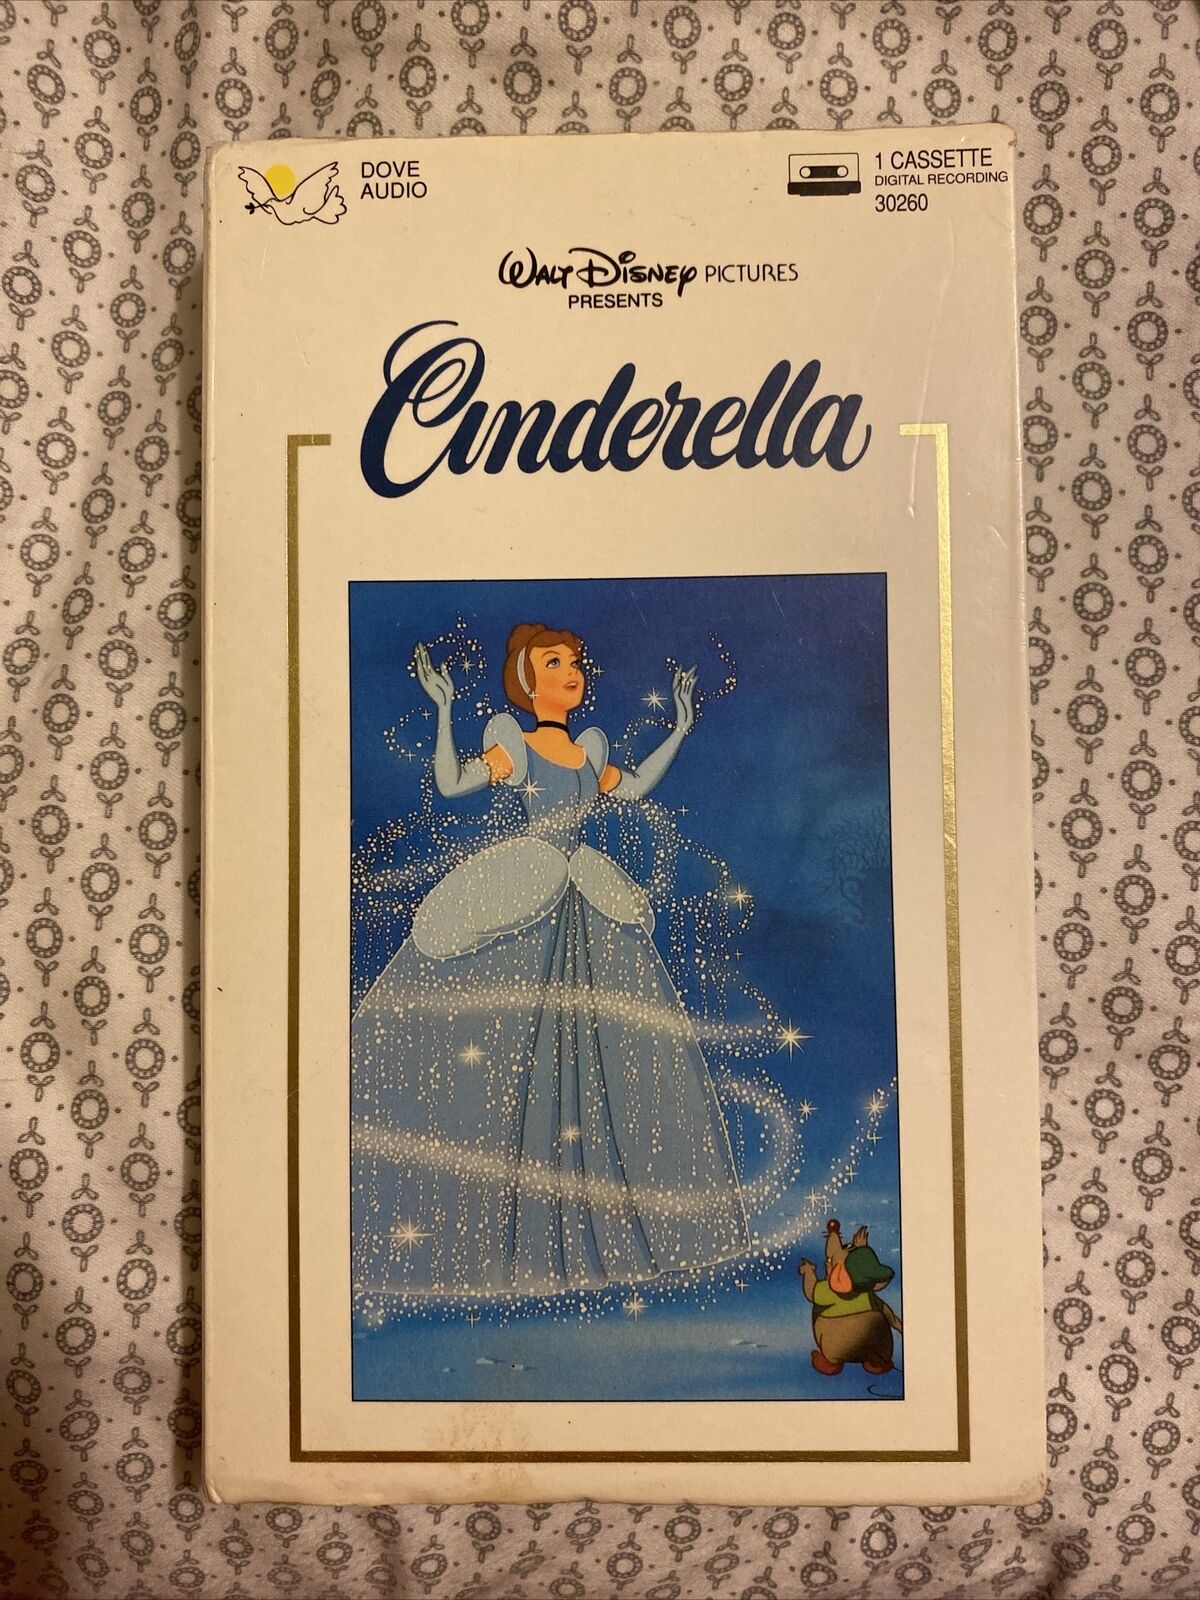 Vtg Cinderella 1990 Cassette Tape WALT DISNEY PICTURES PRESENTS Productions